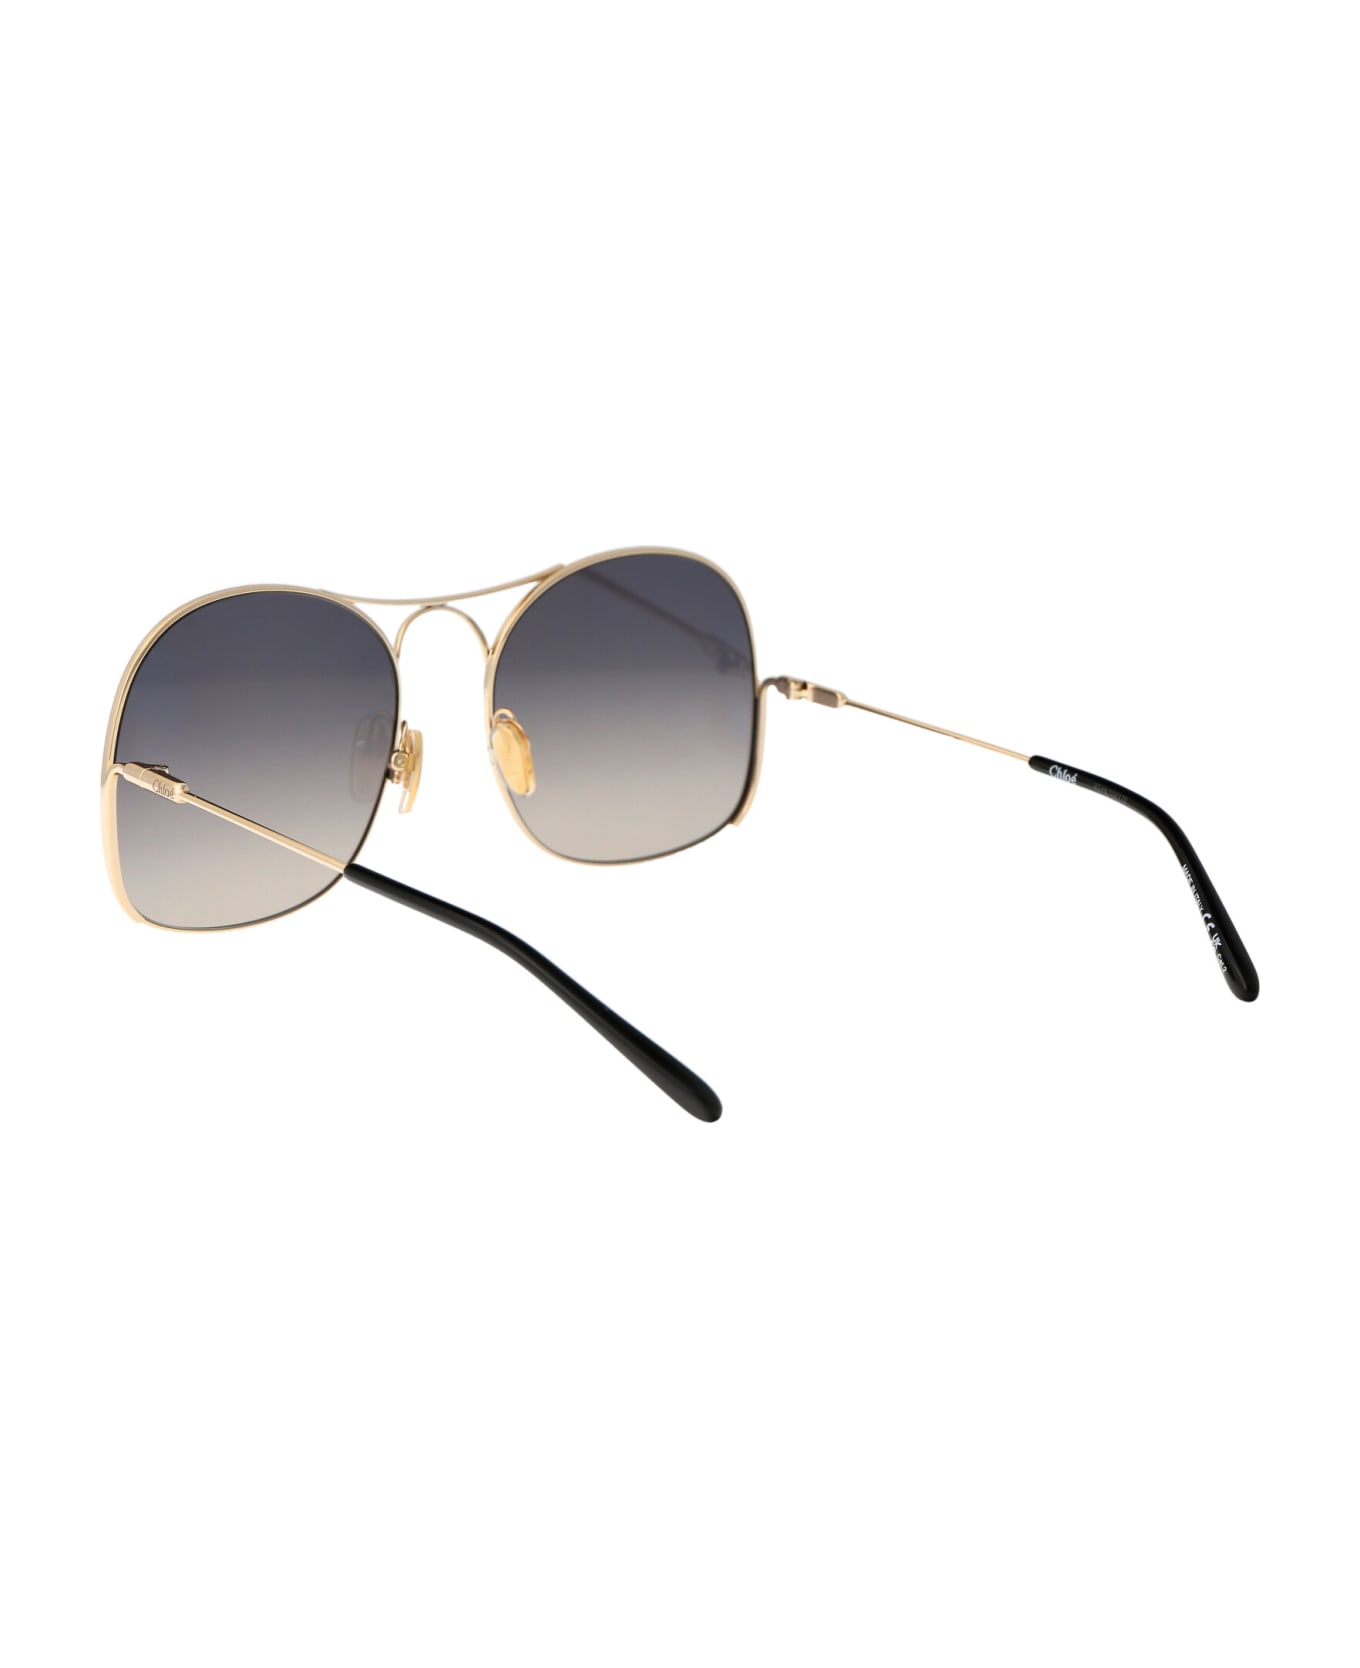 Chloé Eyewear Ch0164s Sunglasses - 001 GOLD GOLD GREY サングラス